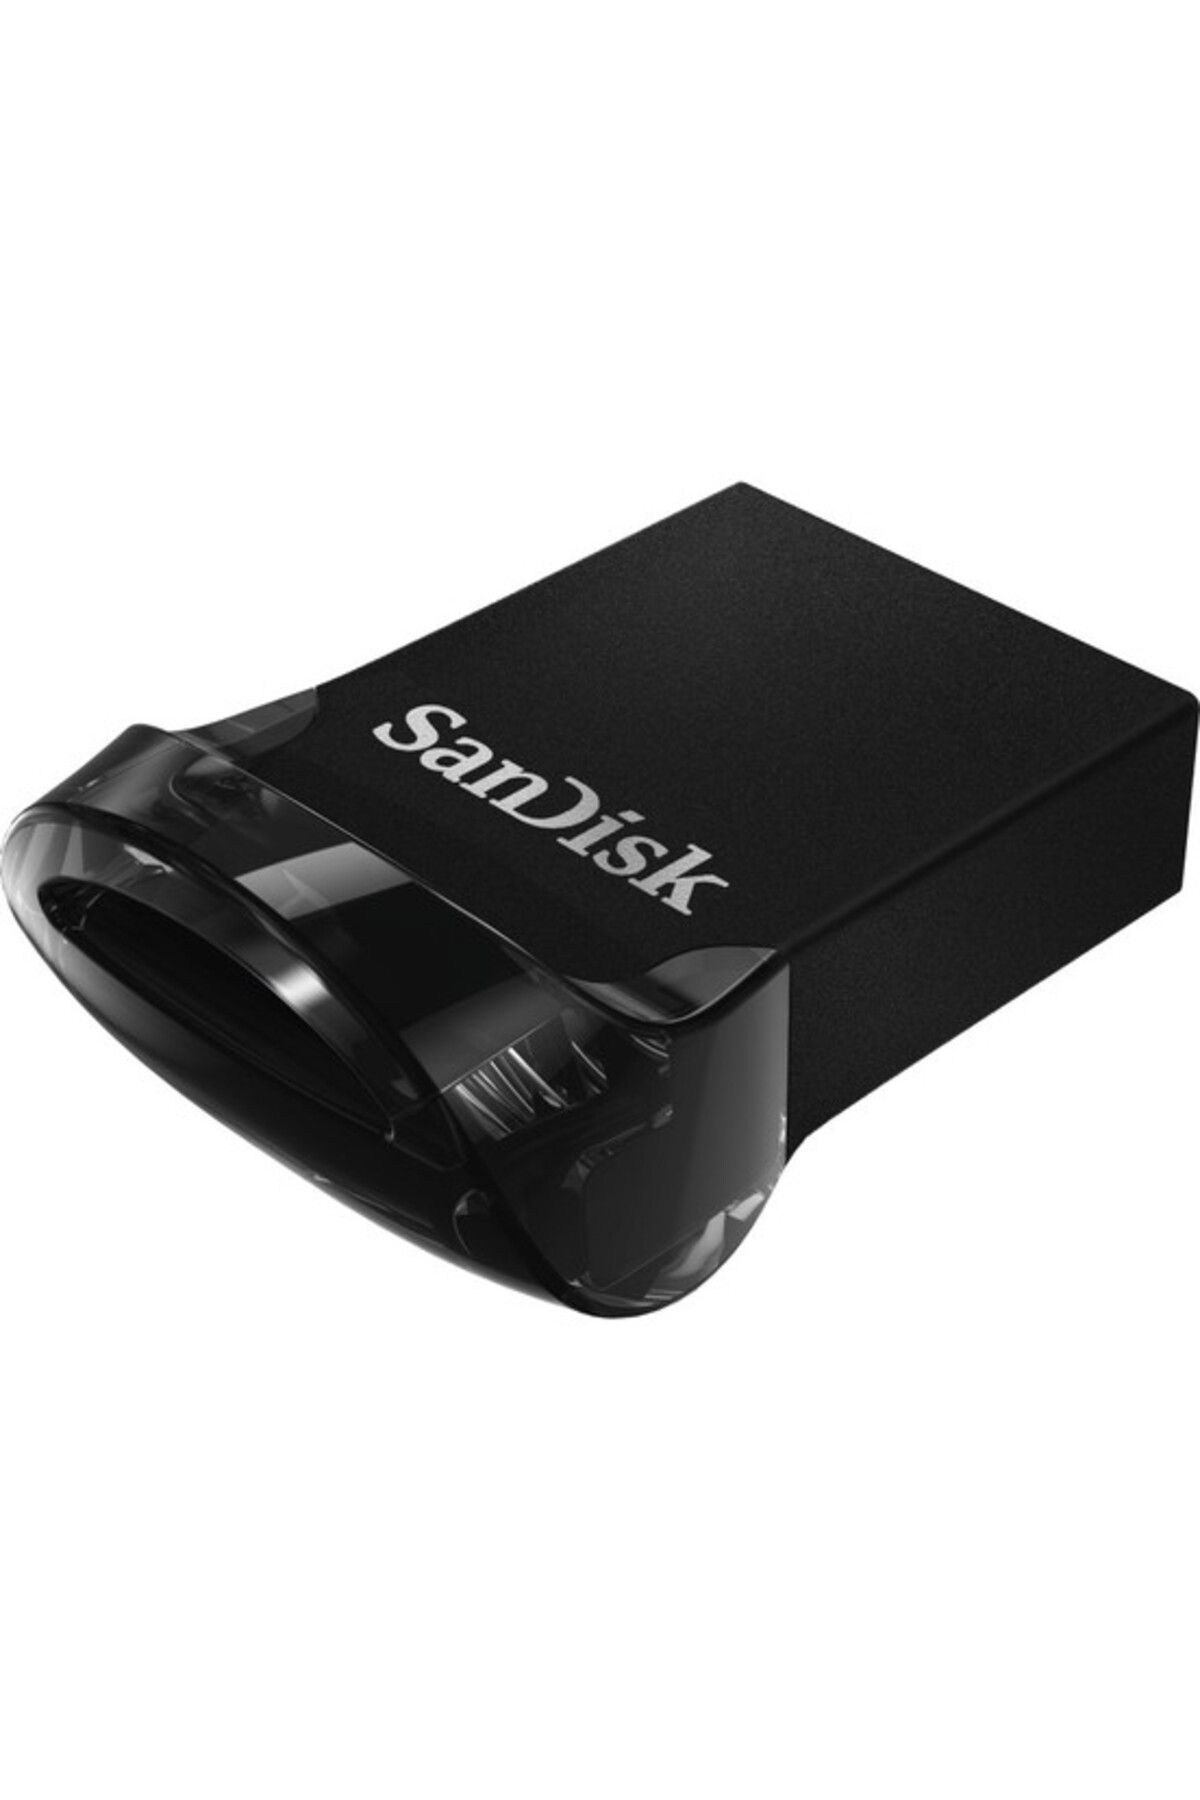 Sandisk Ultra Fit 128 GB USB 3.1 USB Bellek SDCZ430-128G-G46